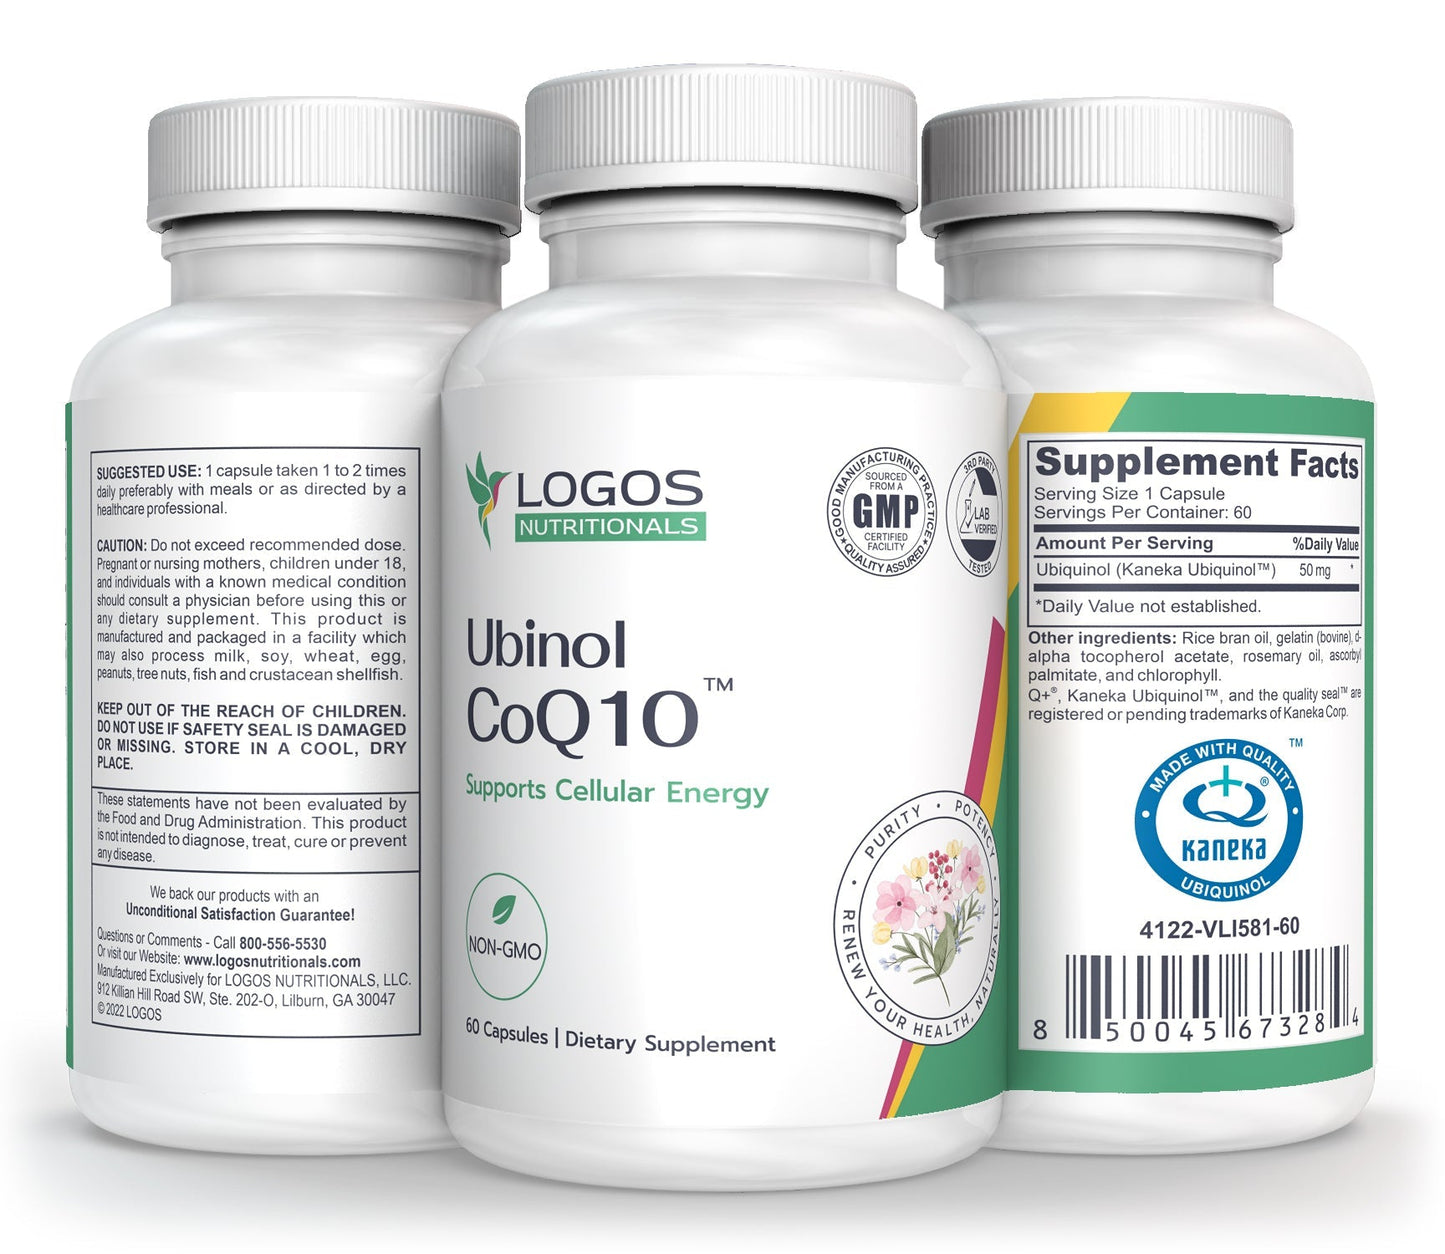 Logos Nutritionals_UBIQUINOL-COQ10